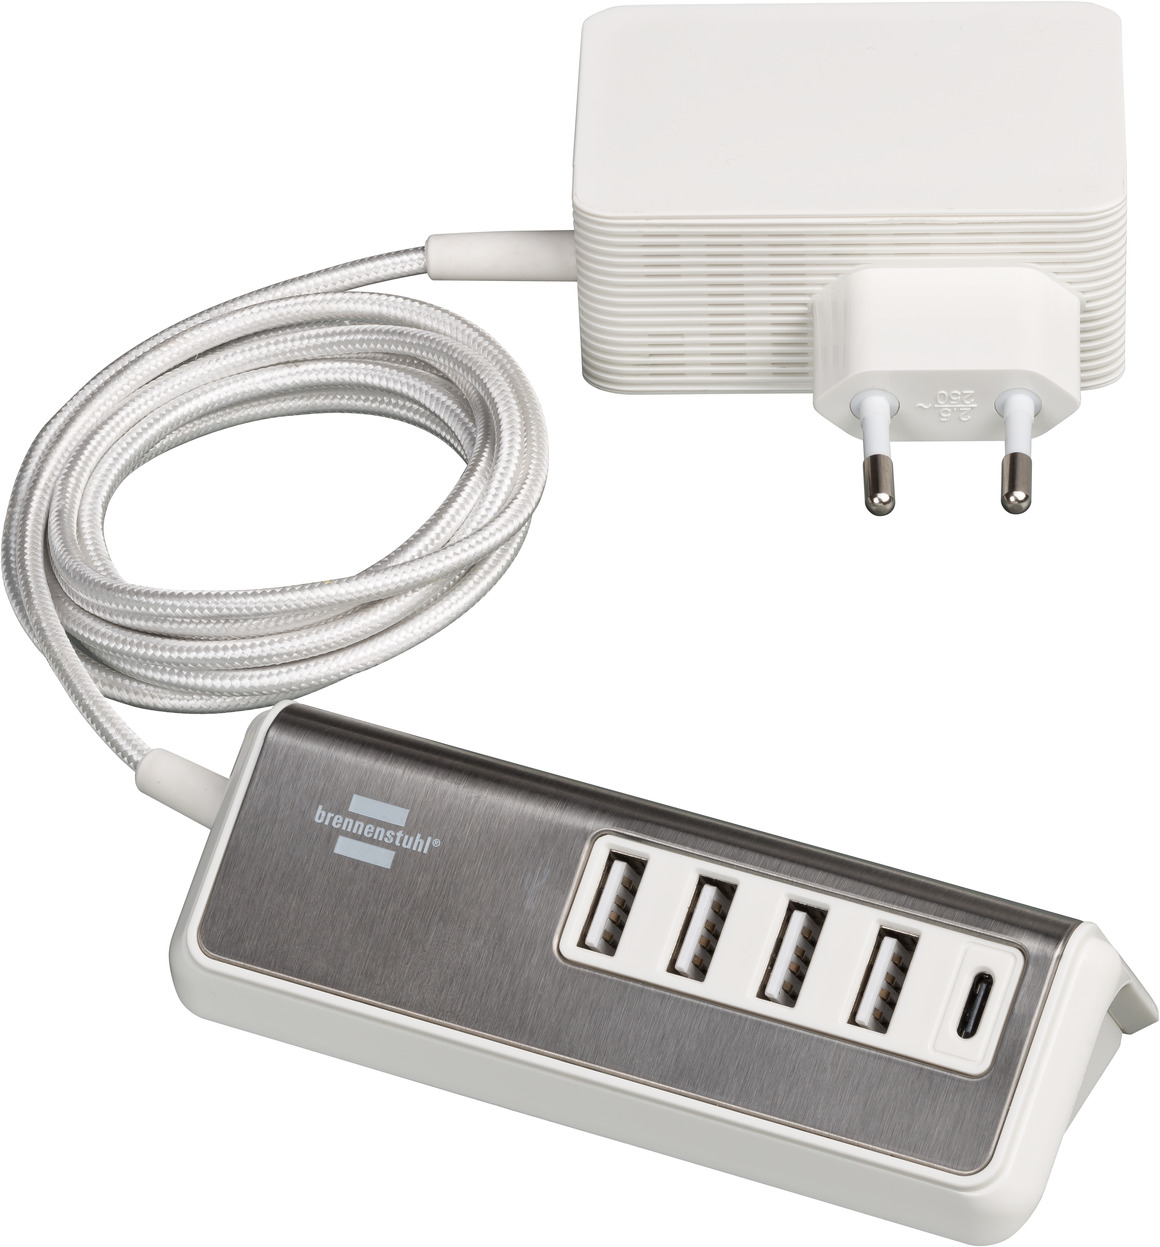 brennenstuhl®estilo USB multi charger with 1.5m textile cable 4x